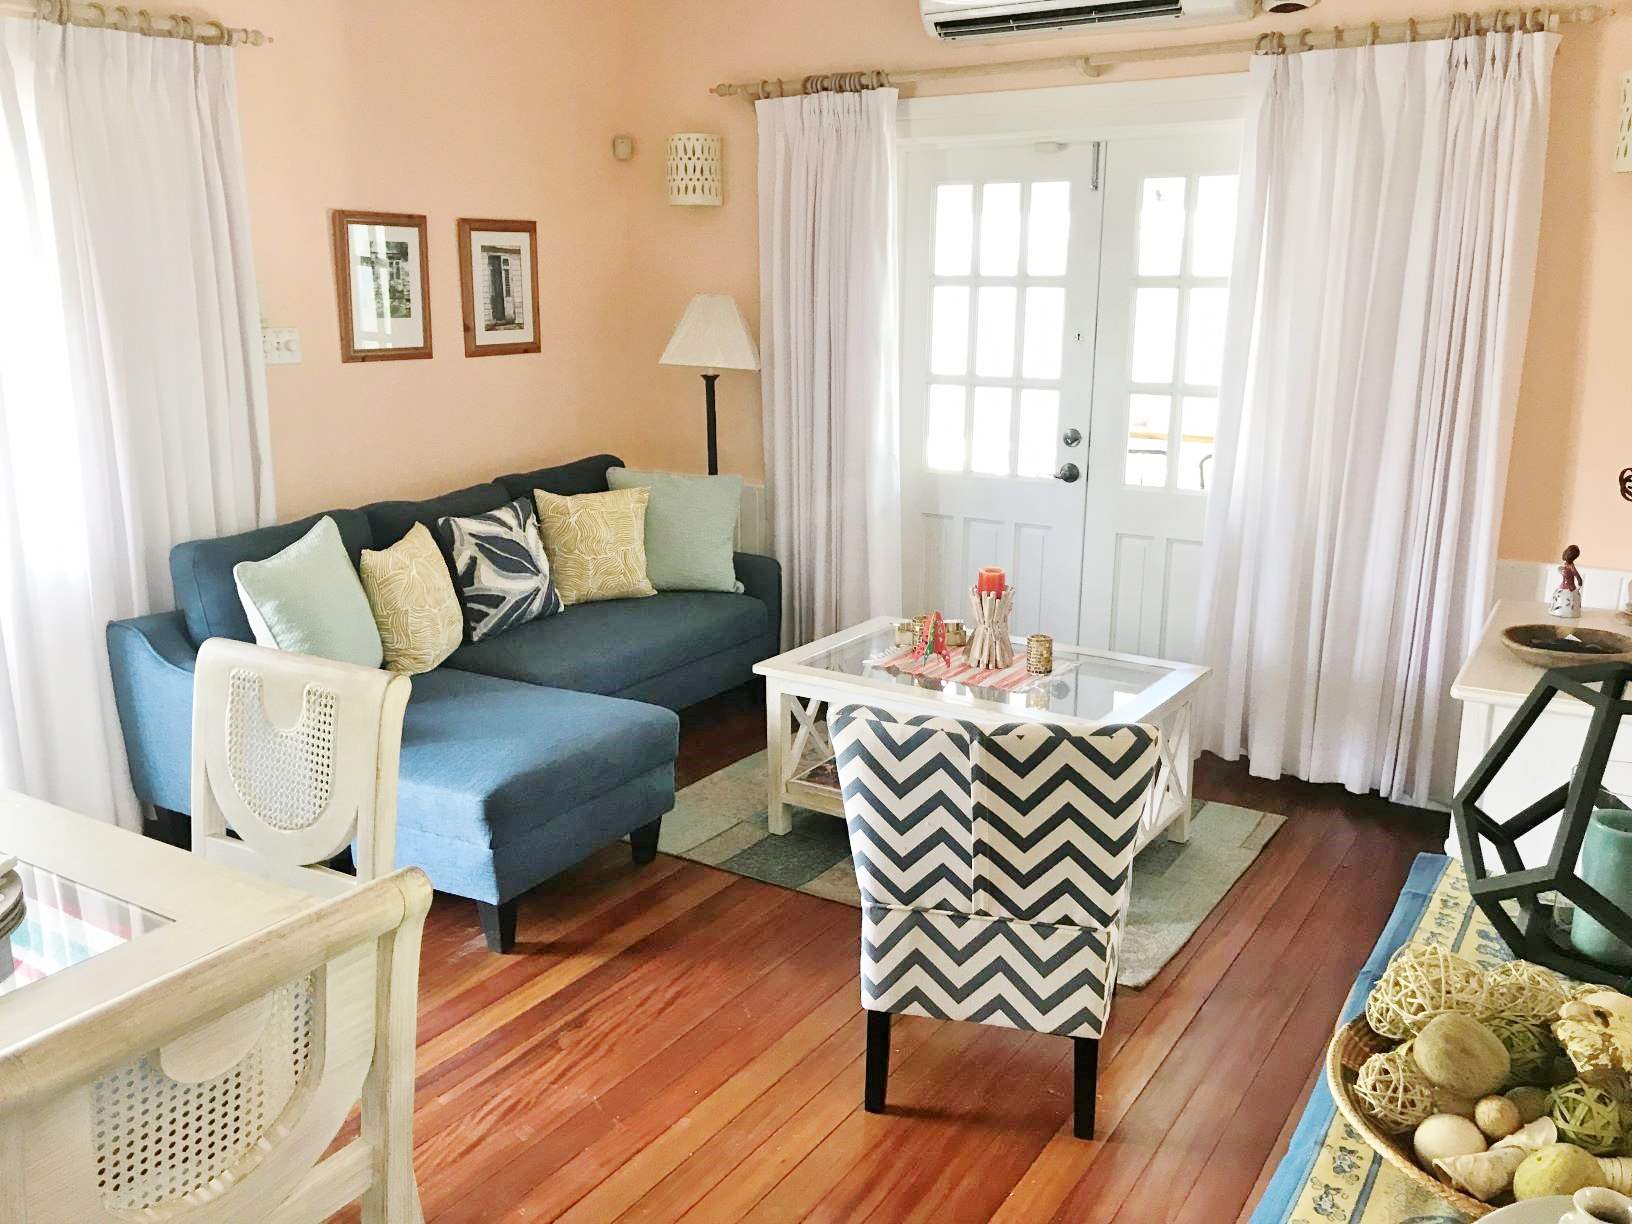 Porters Court 3, 2 bedroom, 2 bedroom villa in St. James & West Coast, Barbados Photo #5